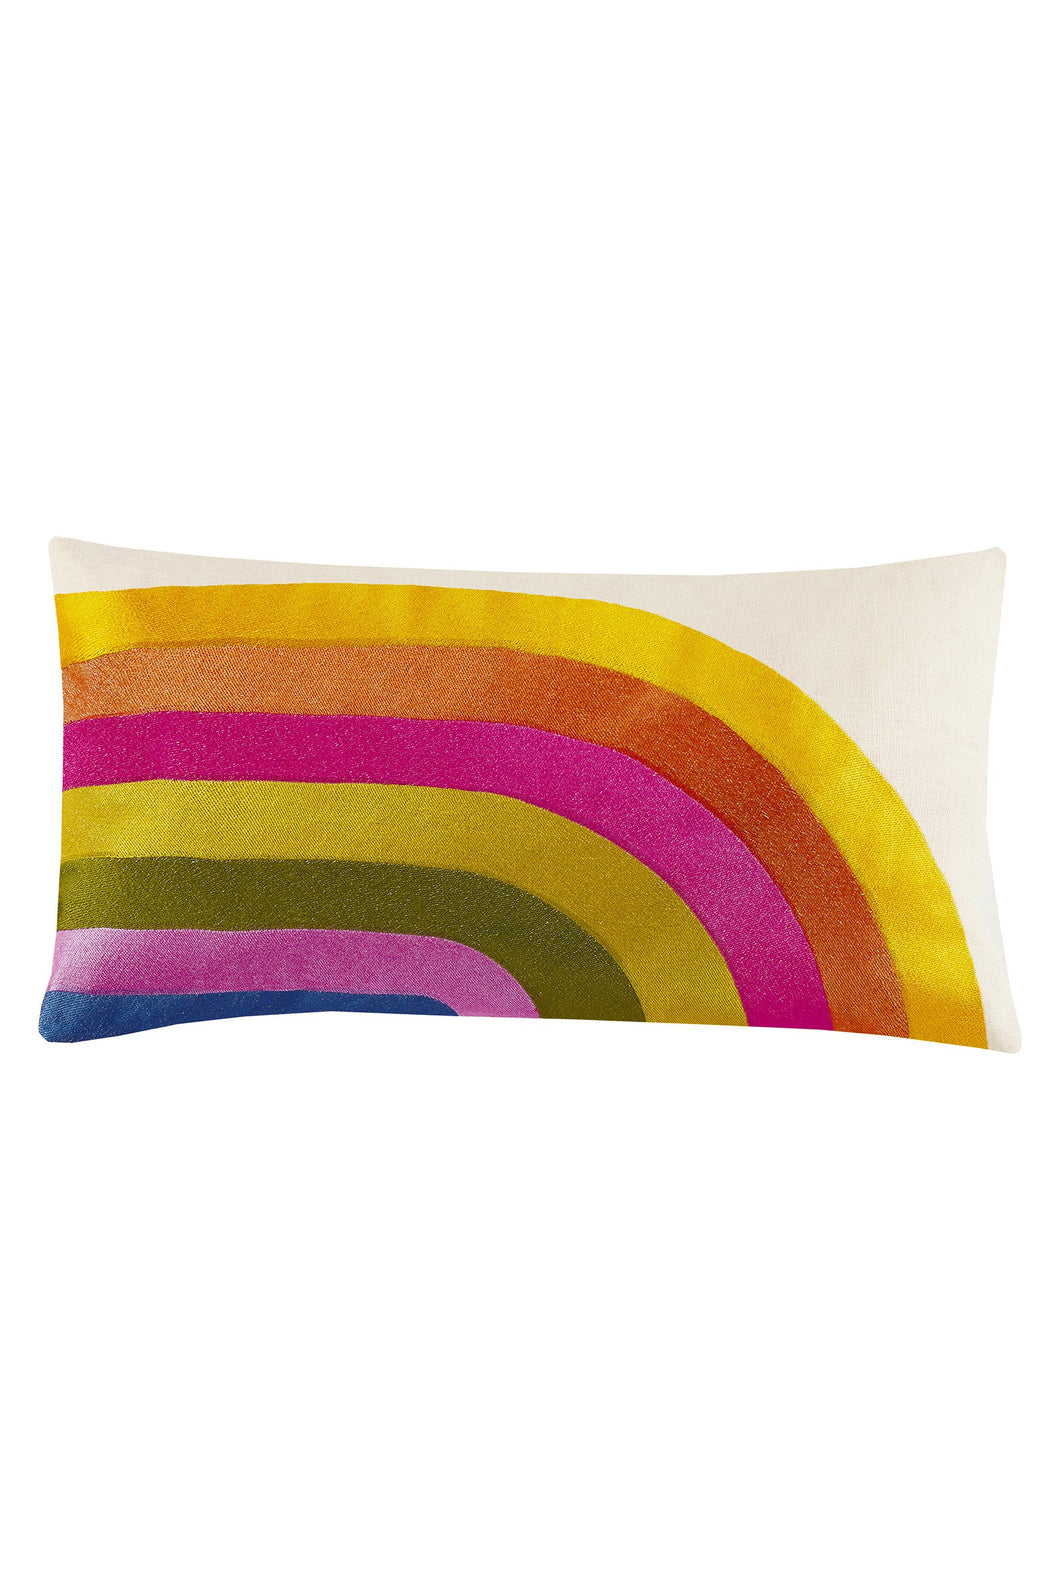 Trina Turk Calistoga Embroidered Pillow- Multi Color